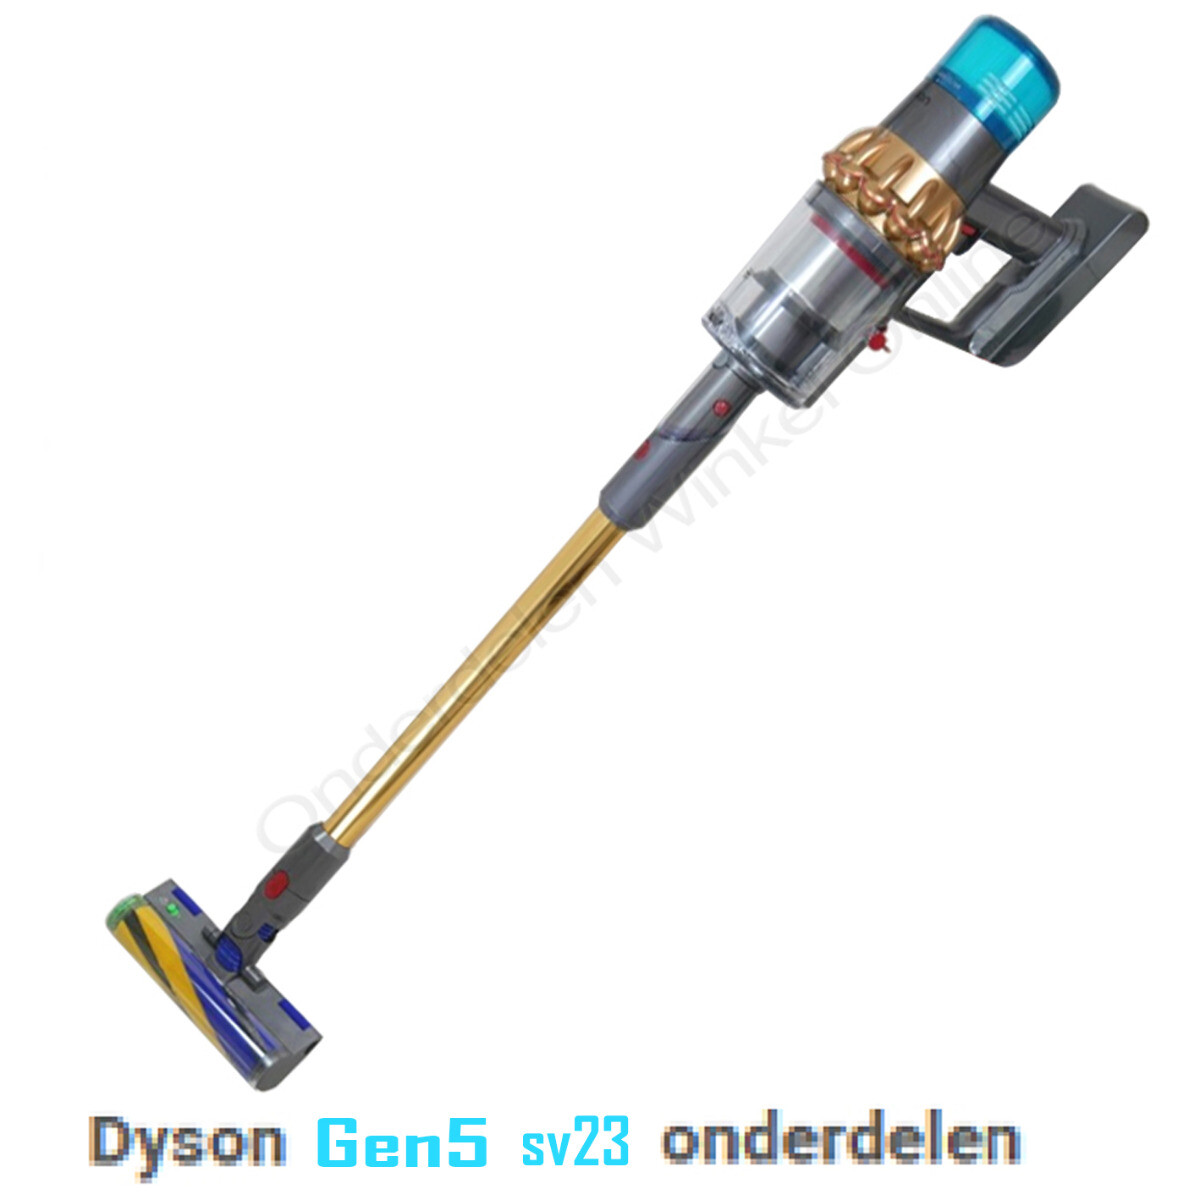 Dyson Gen5 sv23 onderdelen accessoires motor filter zuigmond accu batterij borstel buis oplader